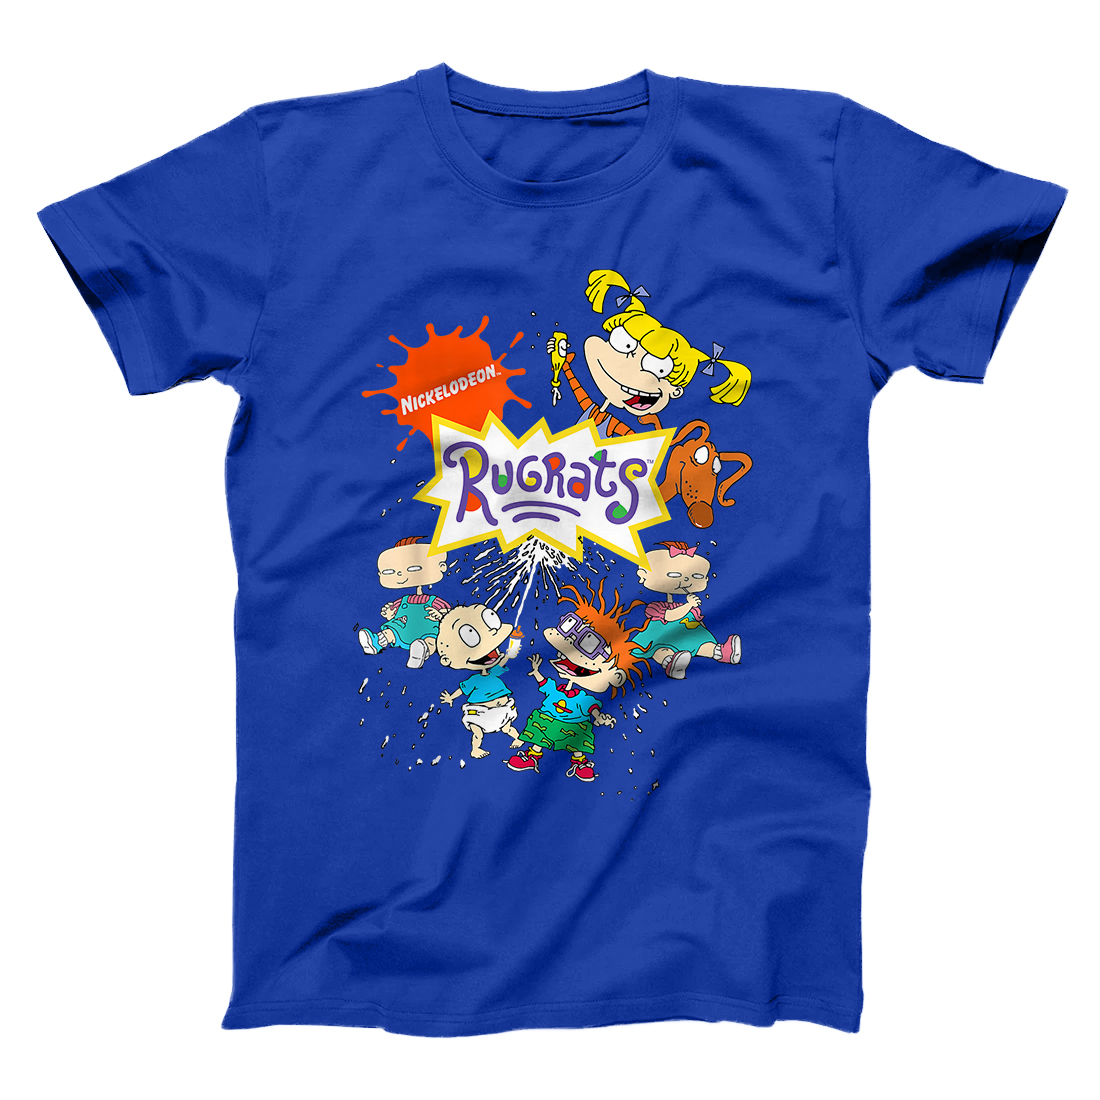 Rugrats Logo With Nick Logo And Rugrats Characters T Shirt All Star Shirt 7152